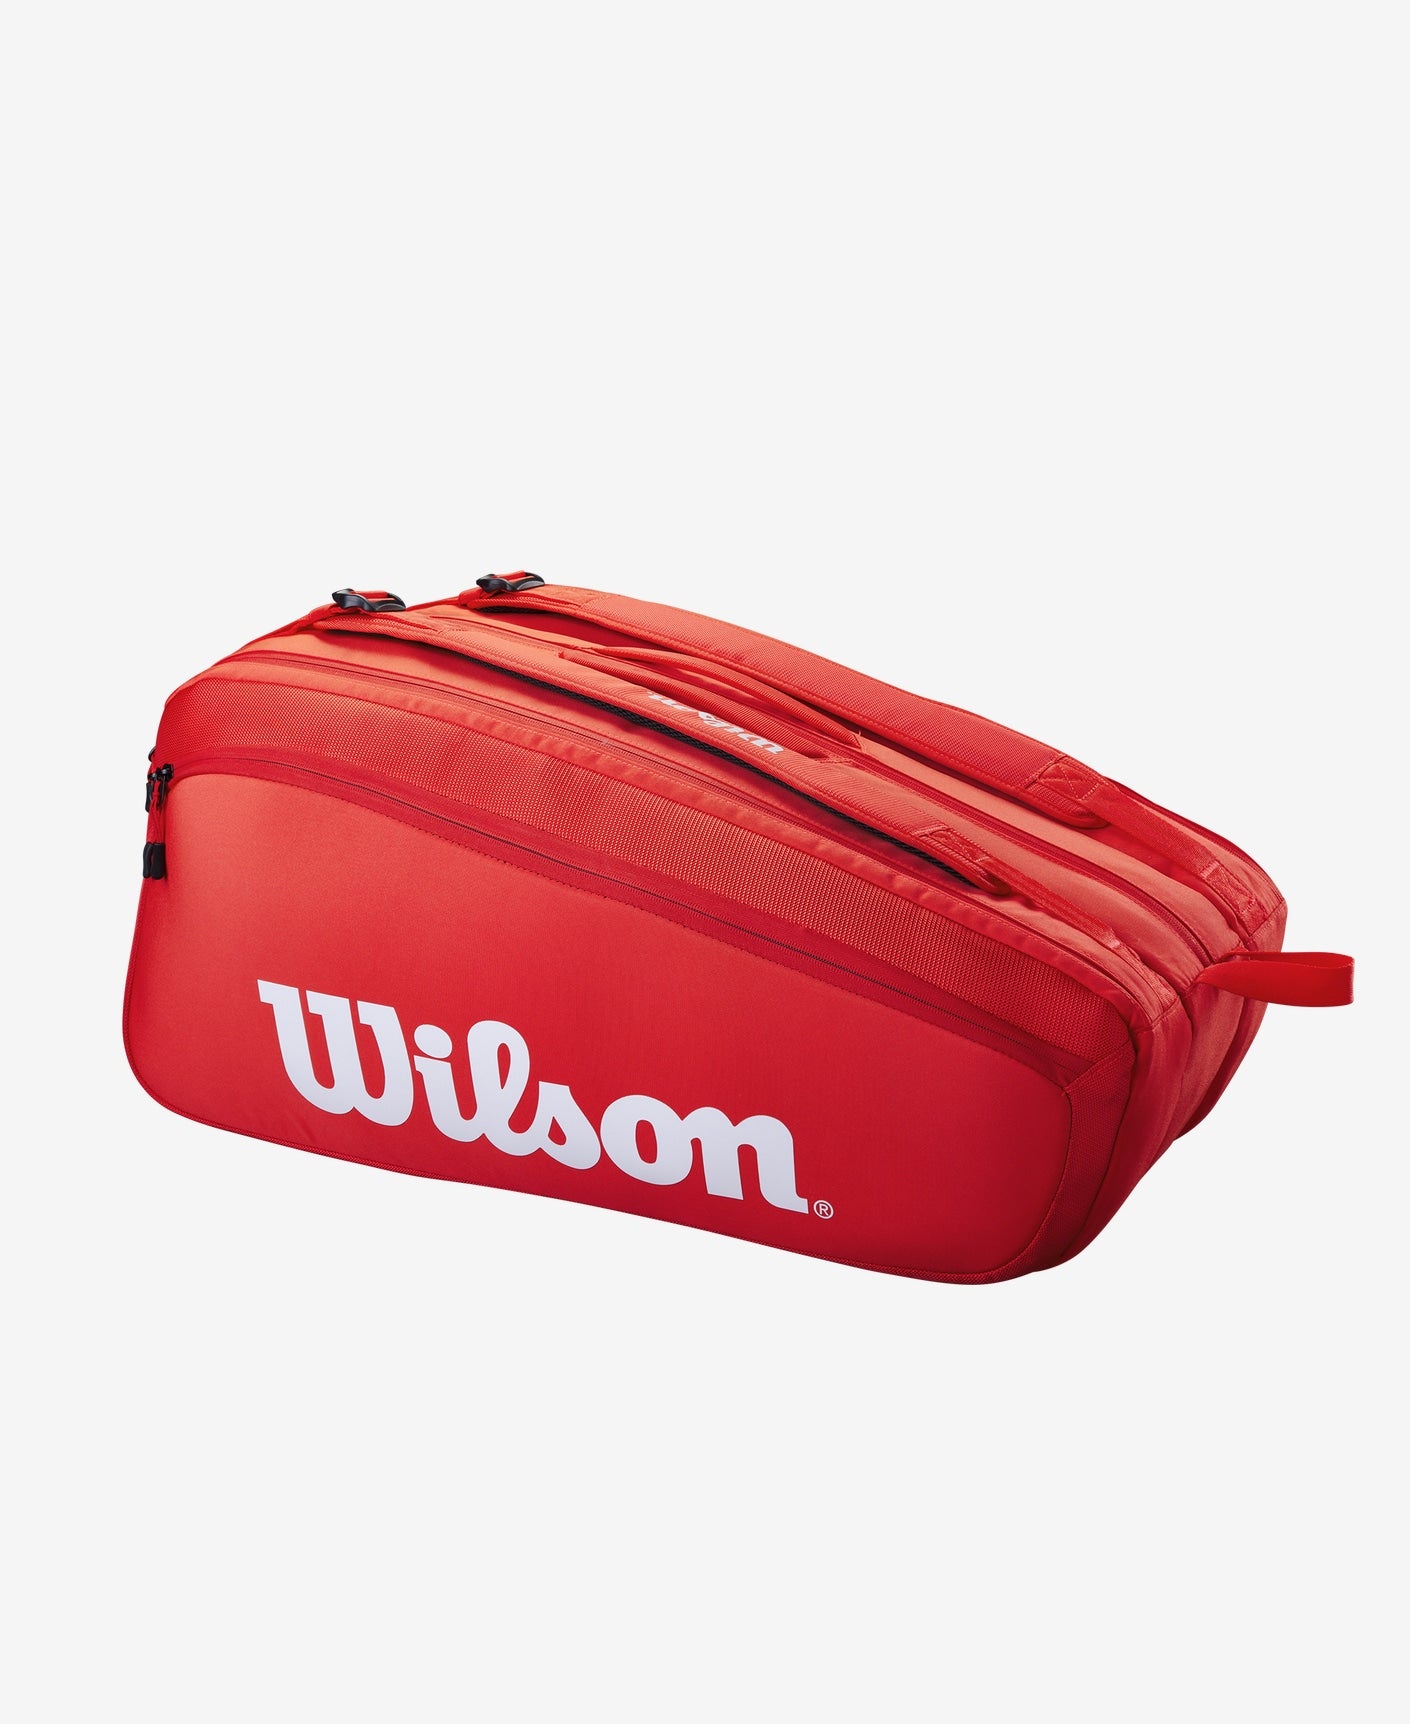 Wilson Super Tour 15 Pack Tennis Bag - Red: Elevating Tennis Gear